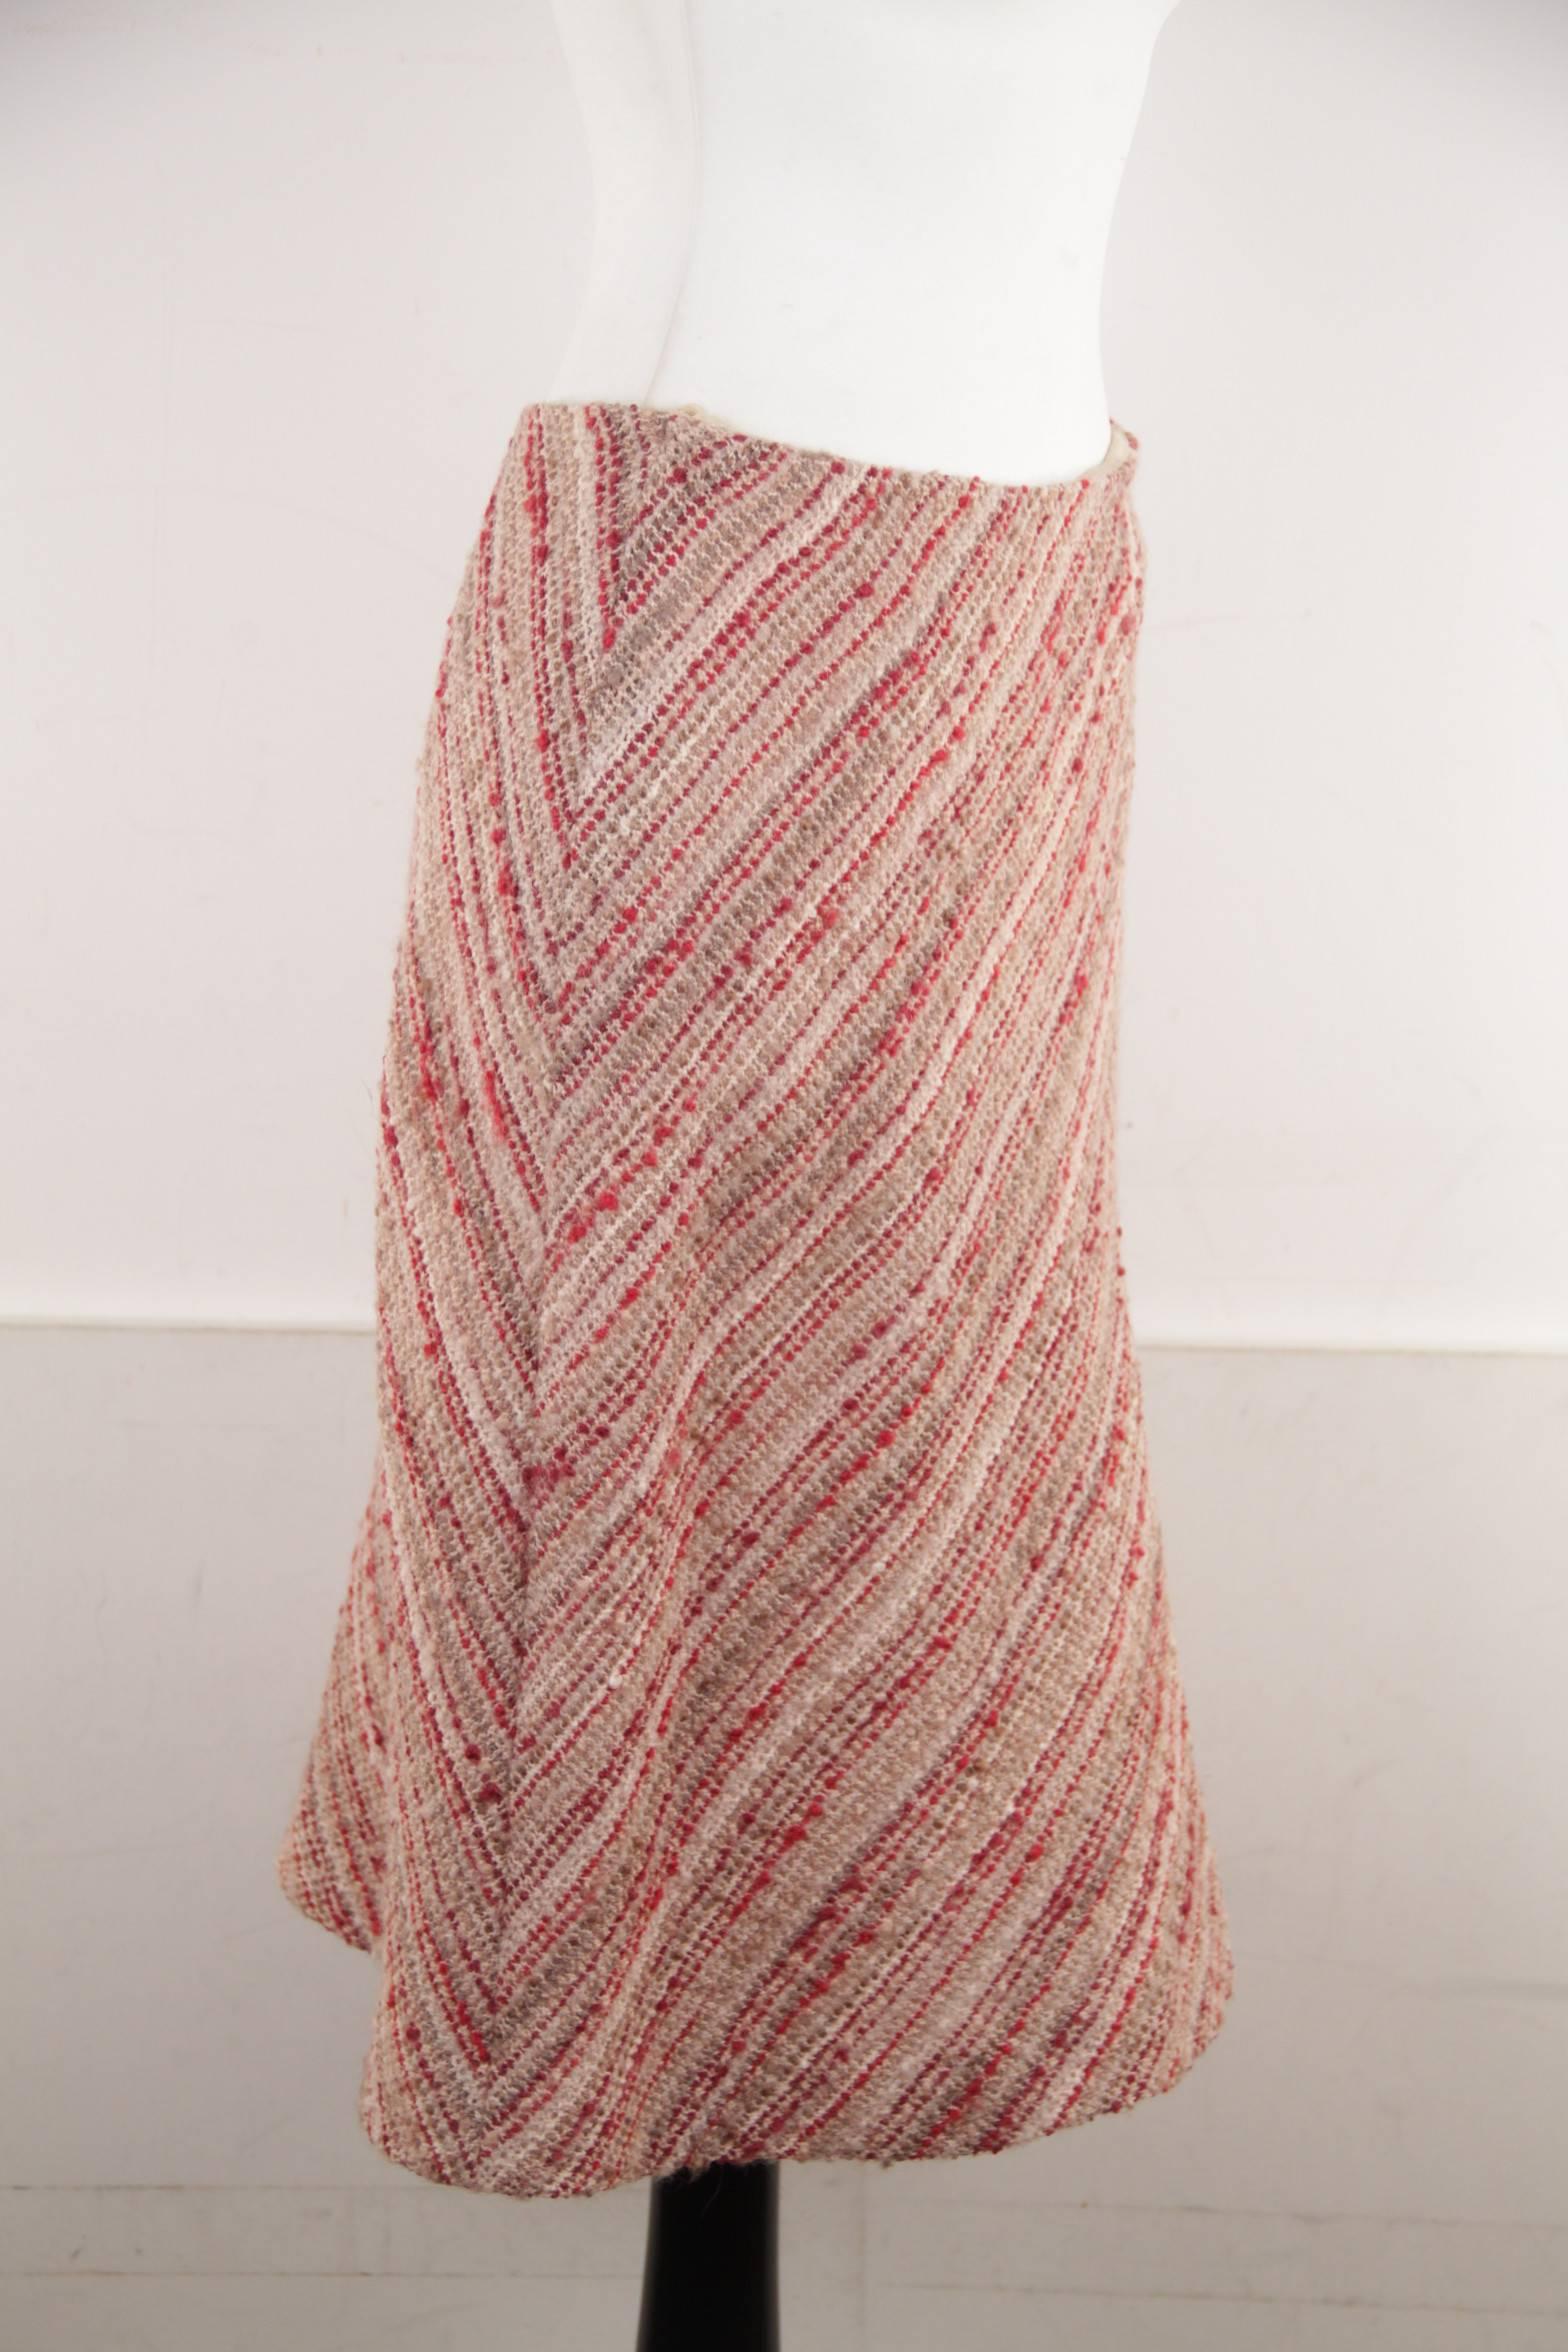 PRADA Italian Red  BOUCLE Tweed Wool SUIT Blazer & Skirt SIZE 42-44 IT  4